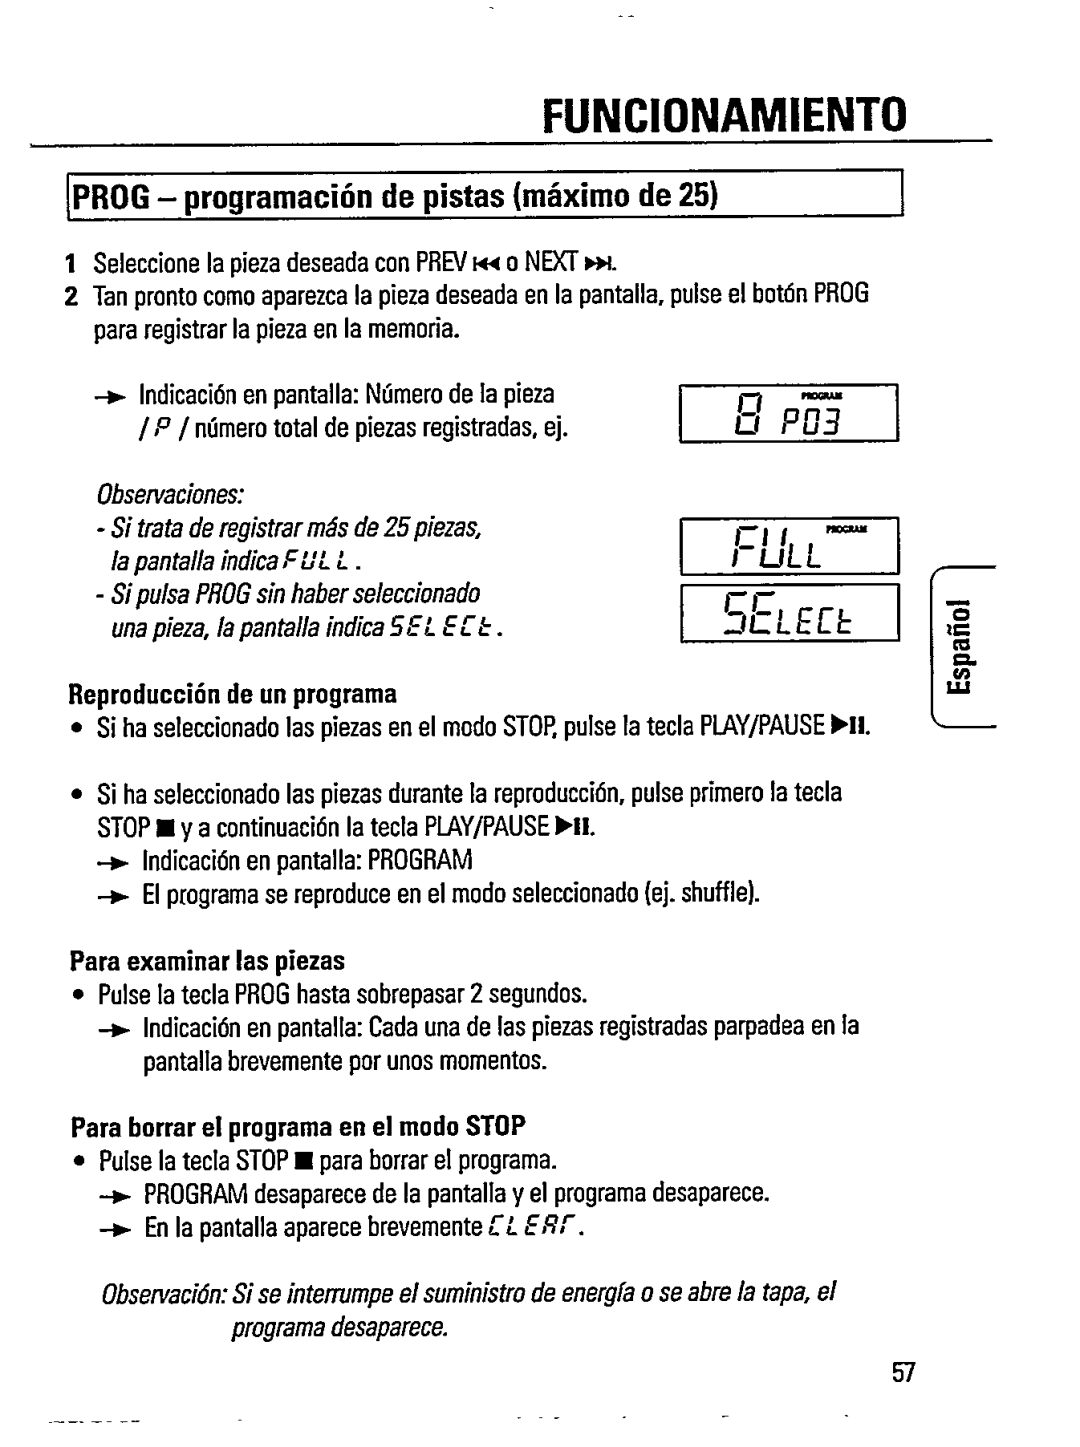 Philips AZ7000 manual 